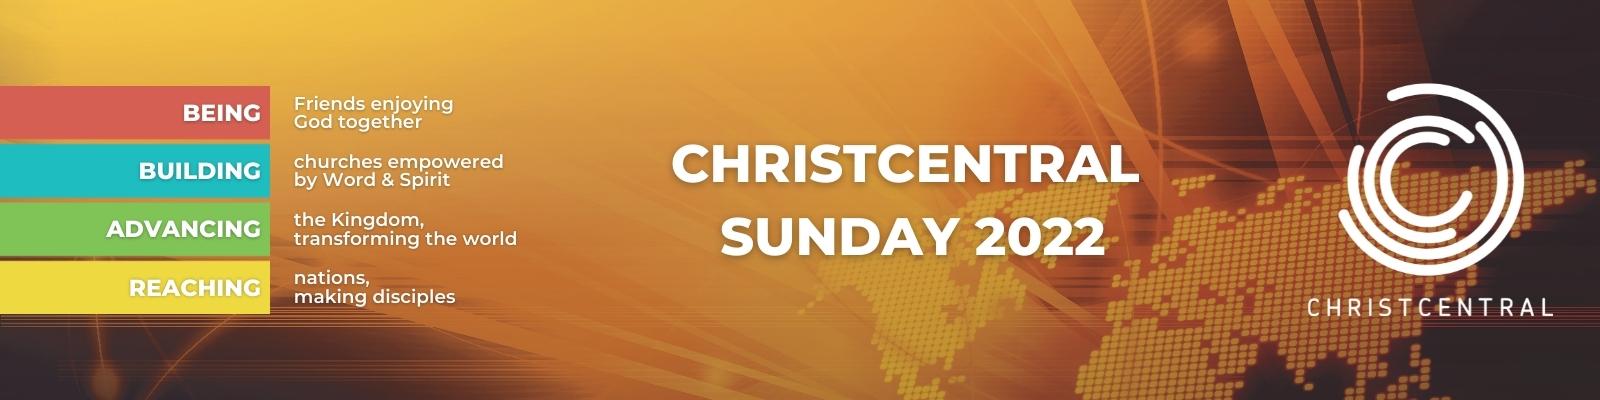 ChristCentral Sunday